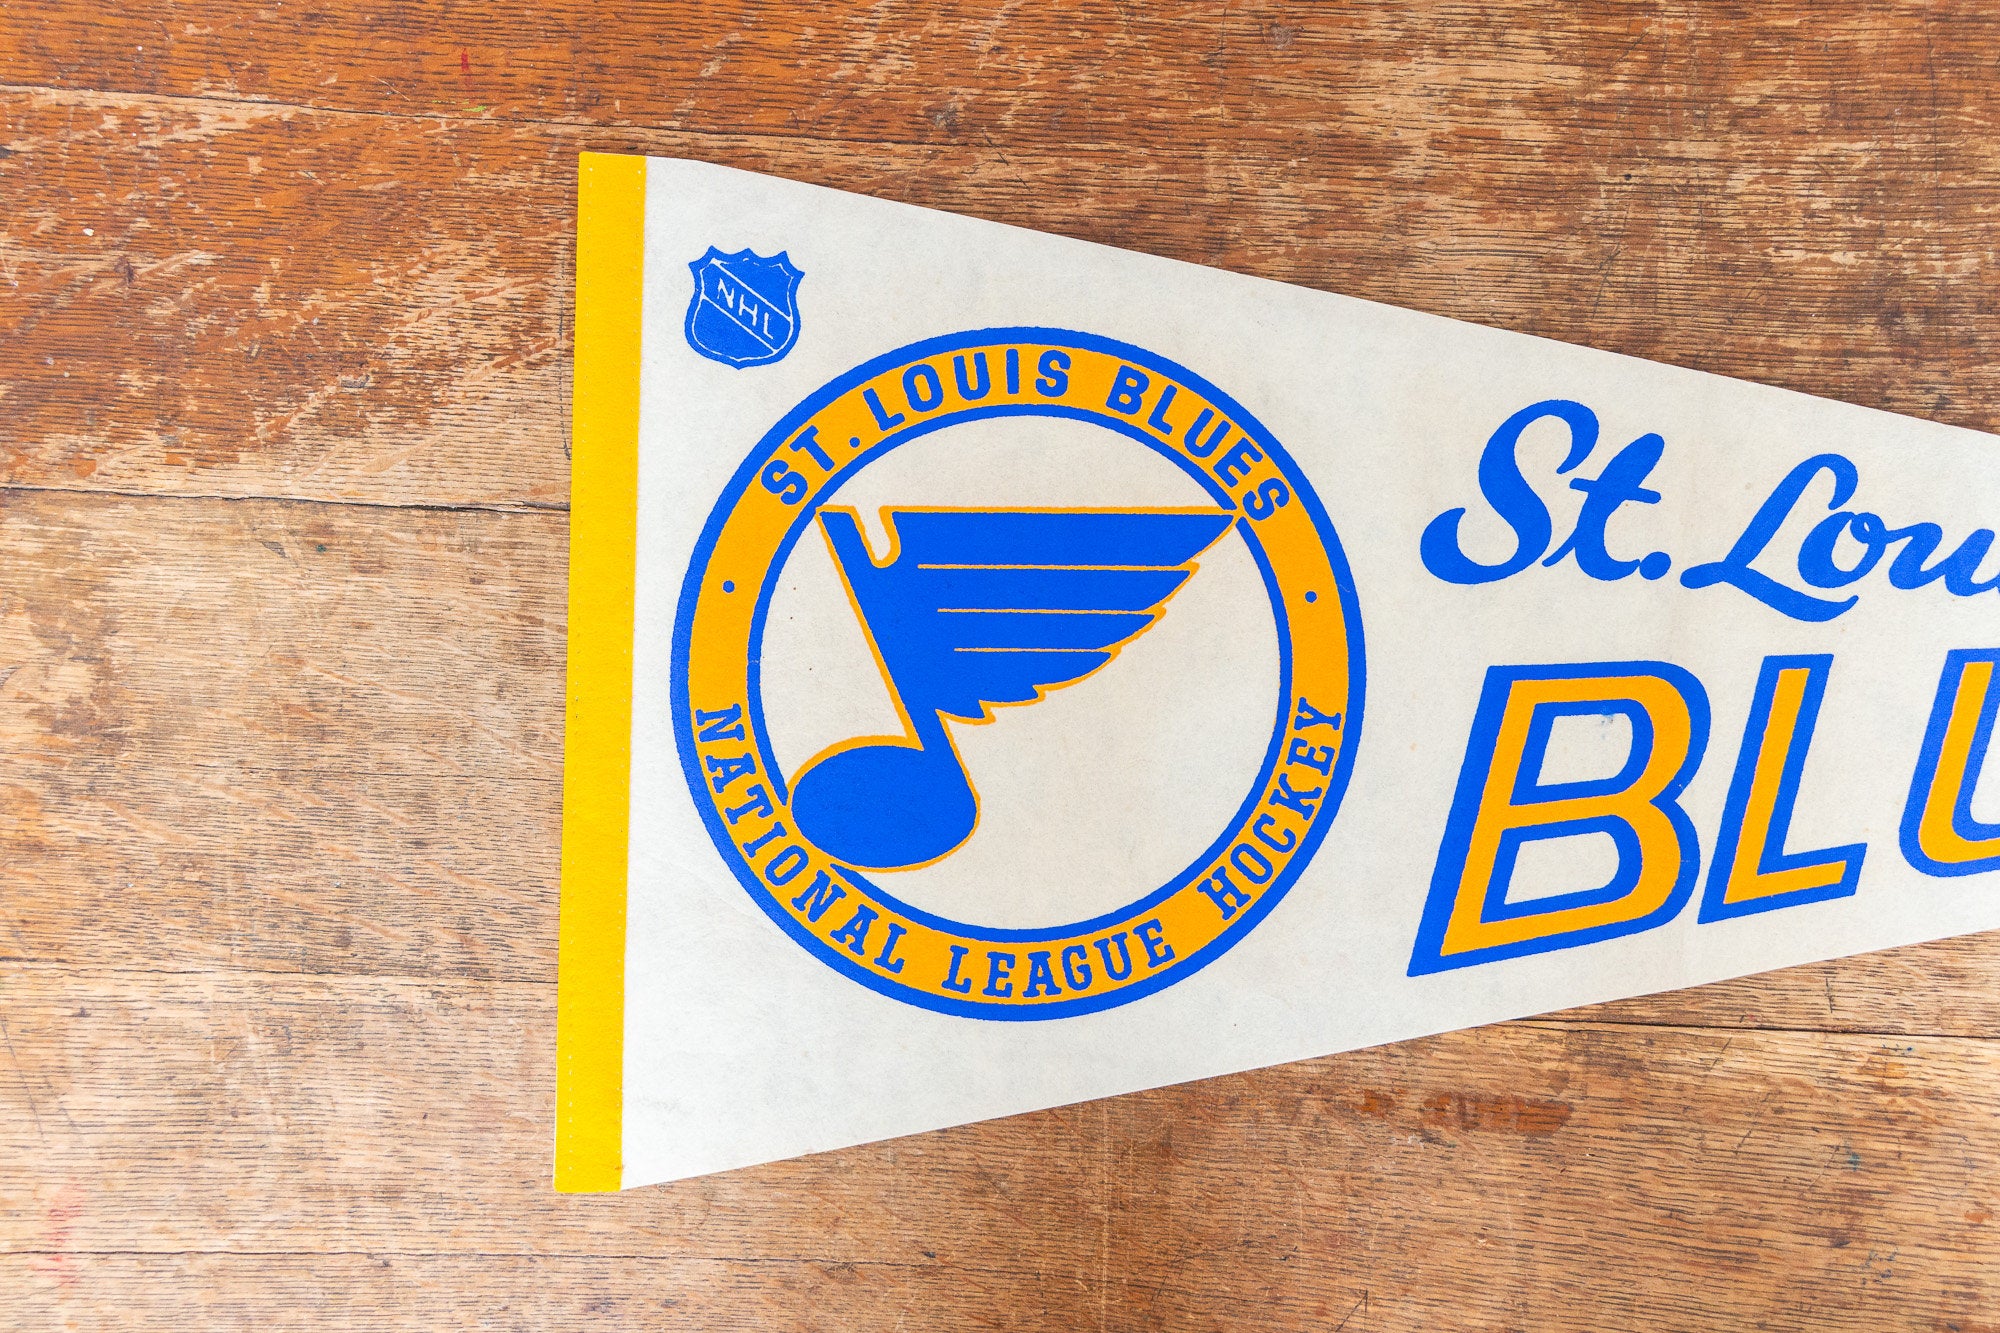 Vintage NHL Souvenir Pennant for the St. Louis Blues Hockey Team